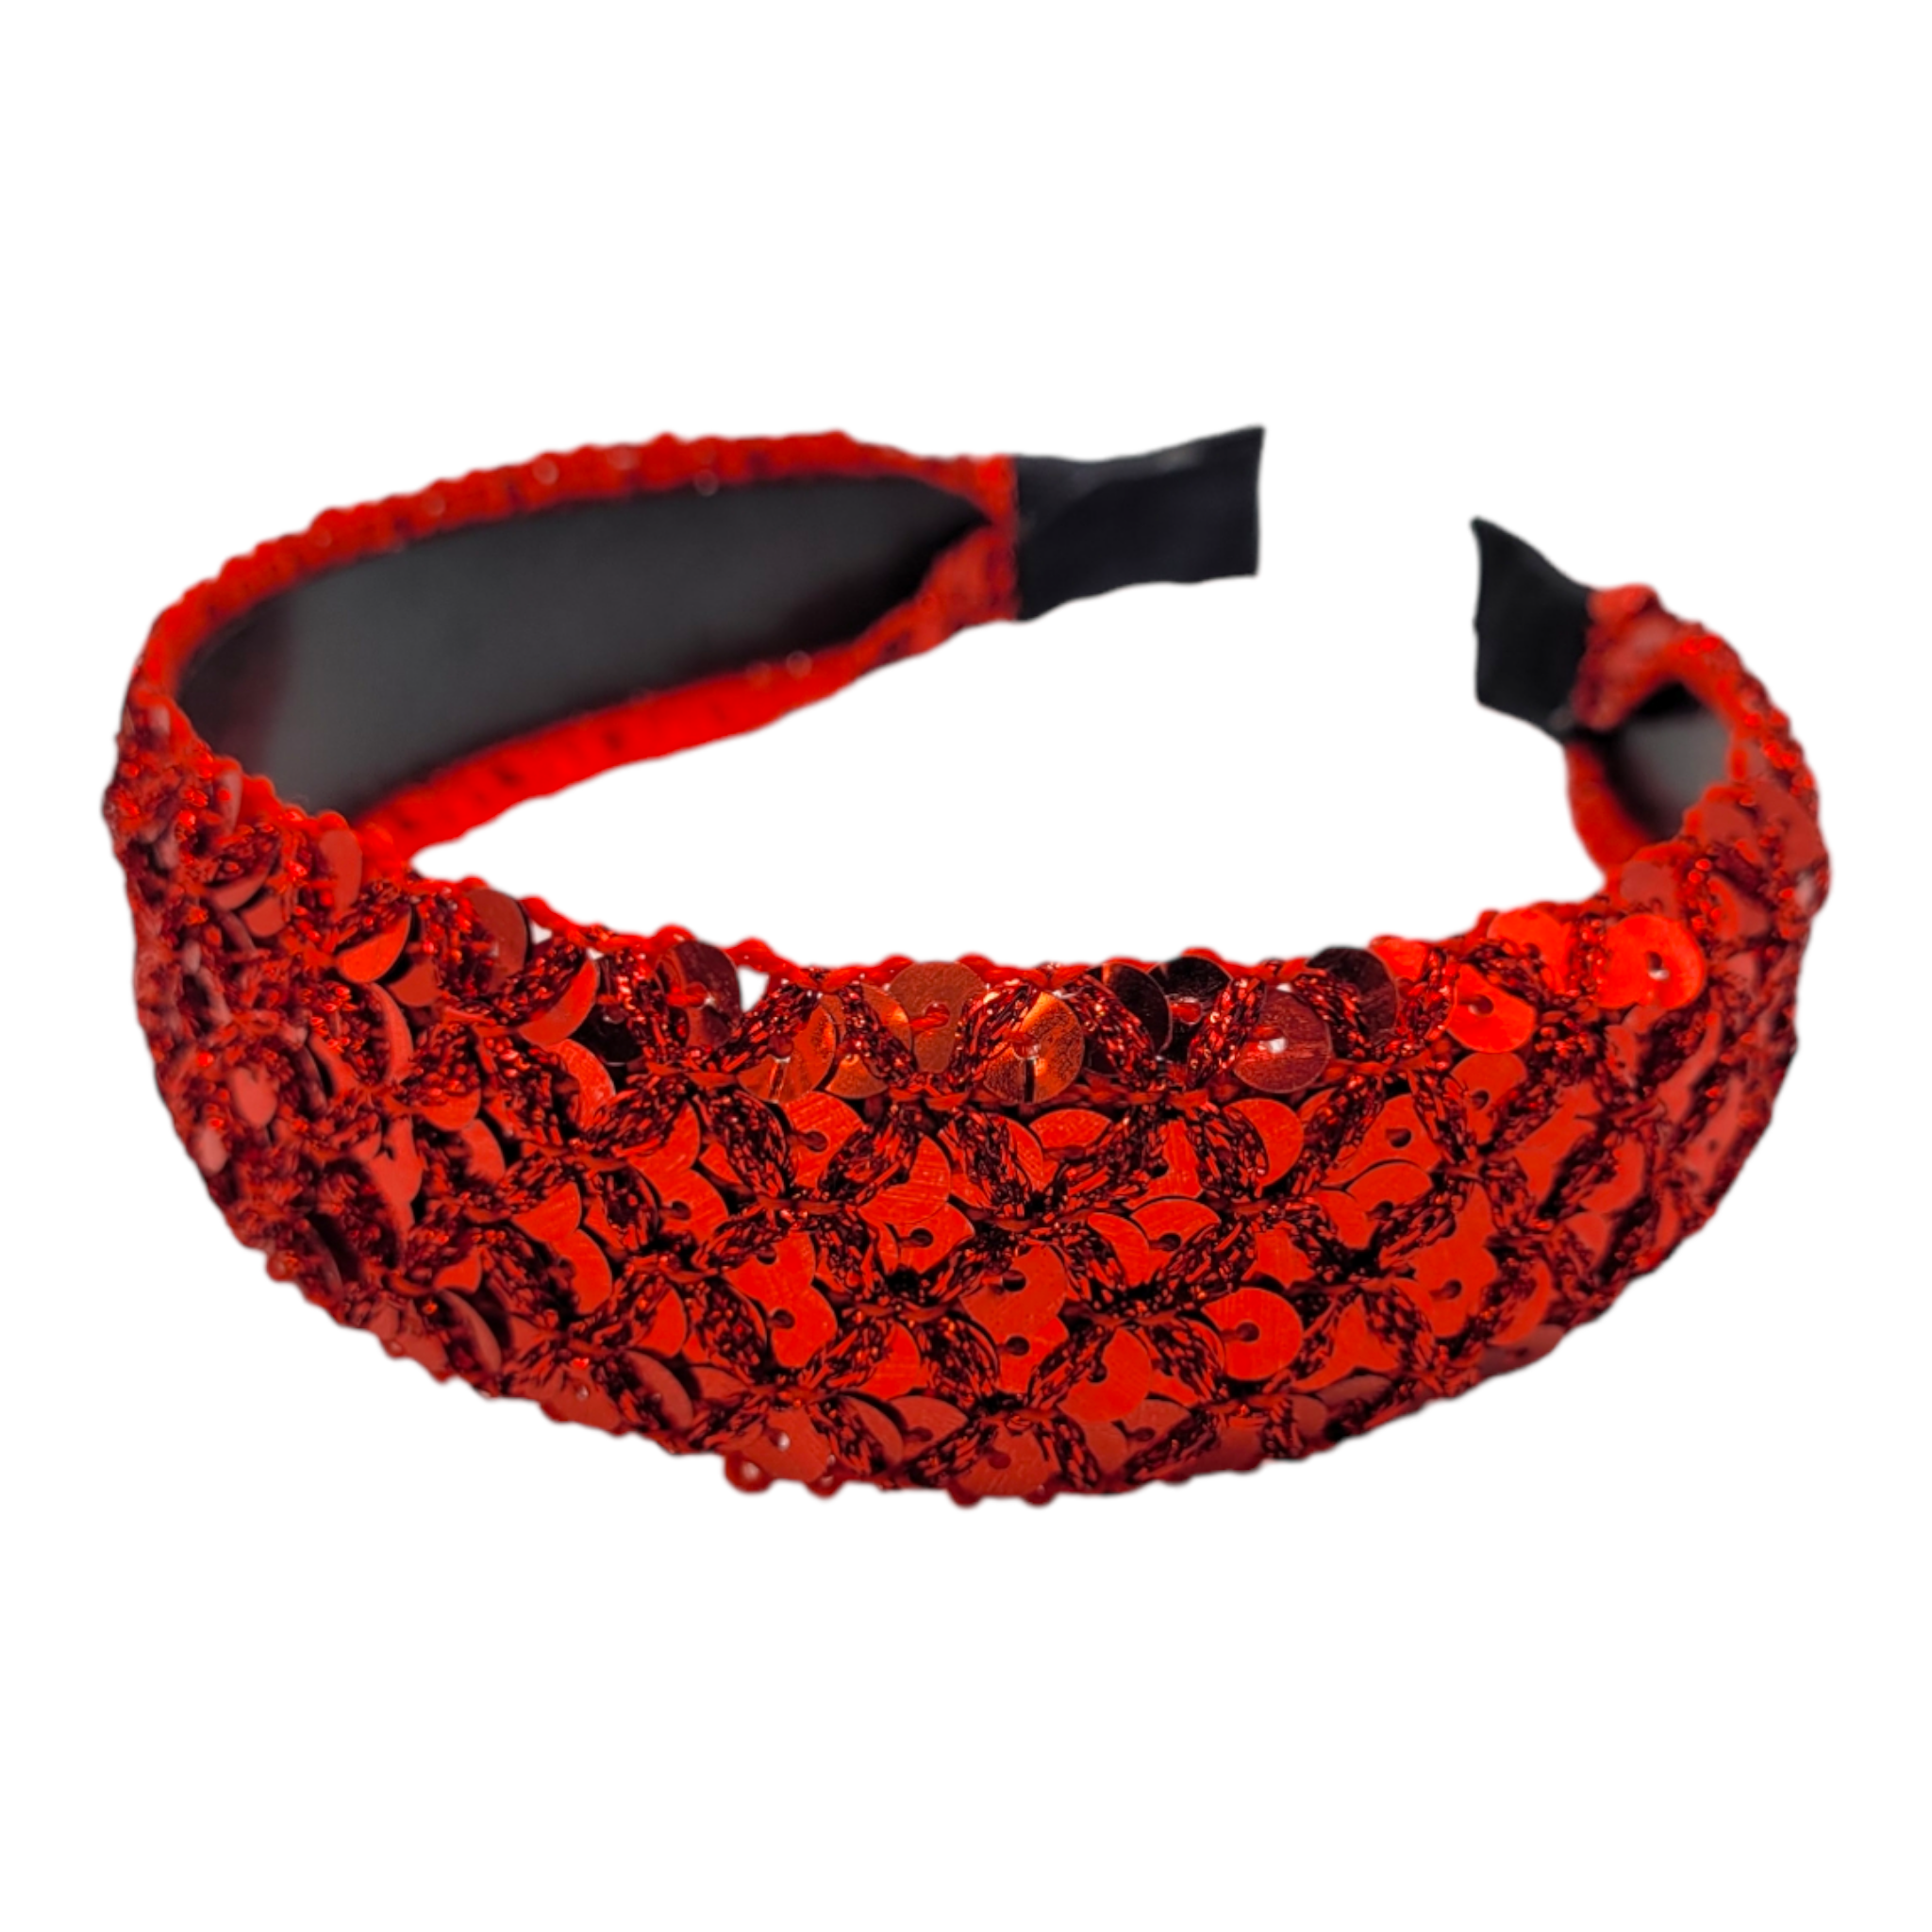 Red Sequin Headband-Accessories-louisgeorgeboutique-LouisGeorge Boutique, Women’s Fashion Boutique Located in Trussville, Alabama